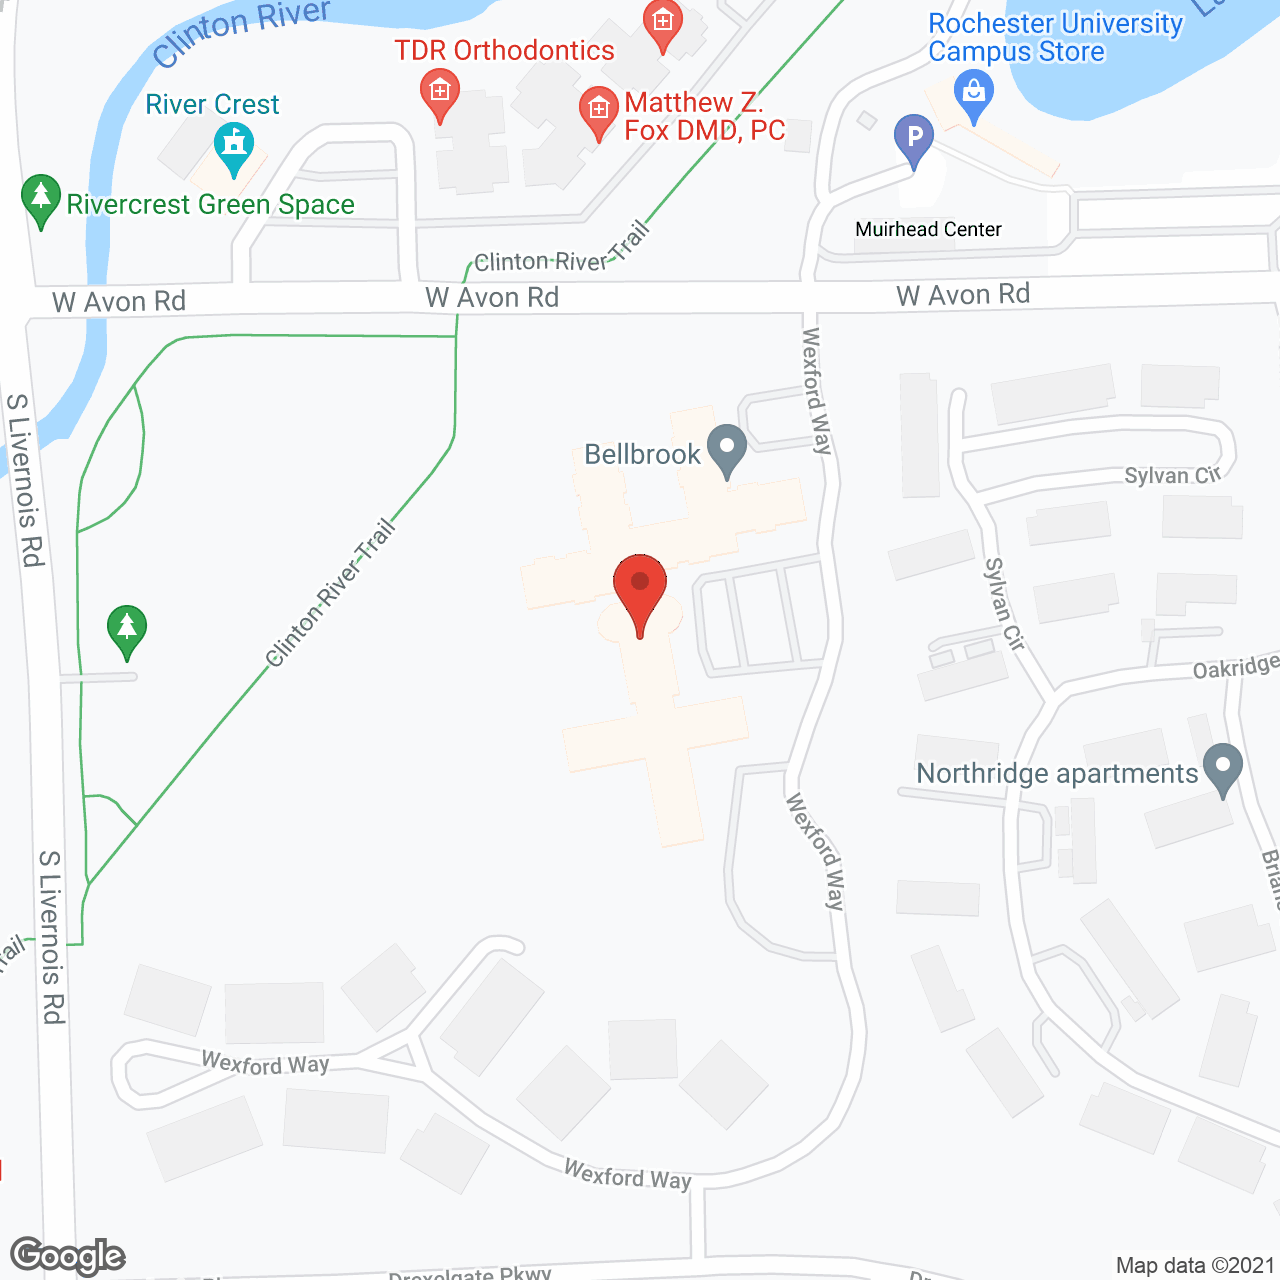 Bellbrook in google map